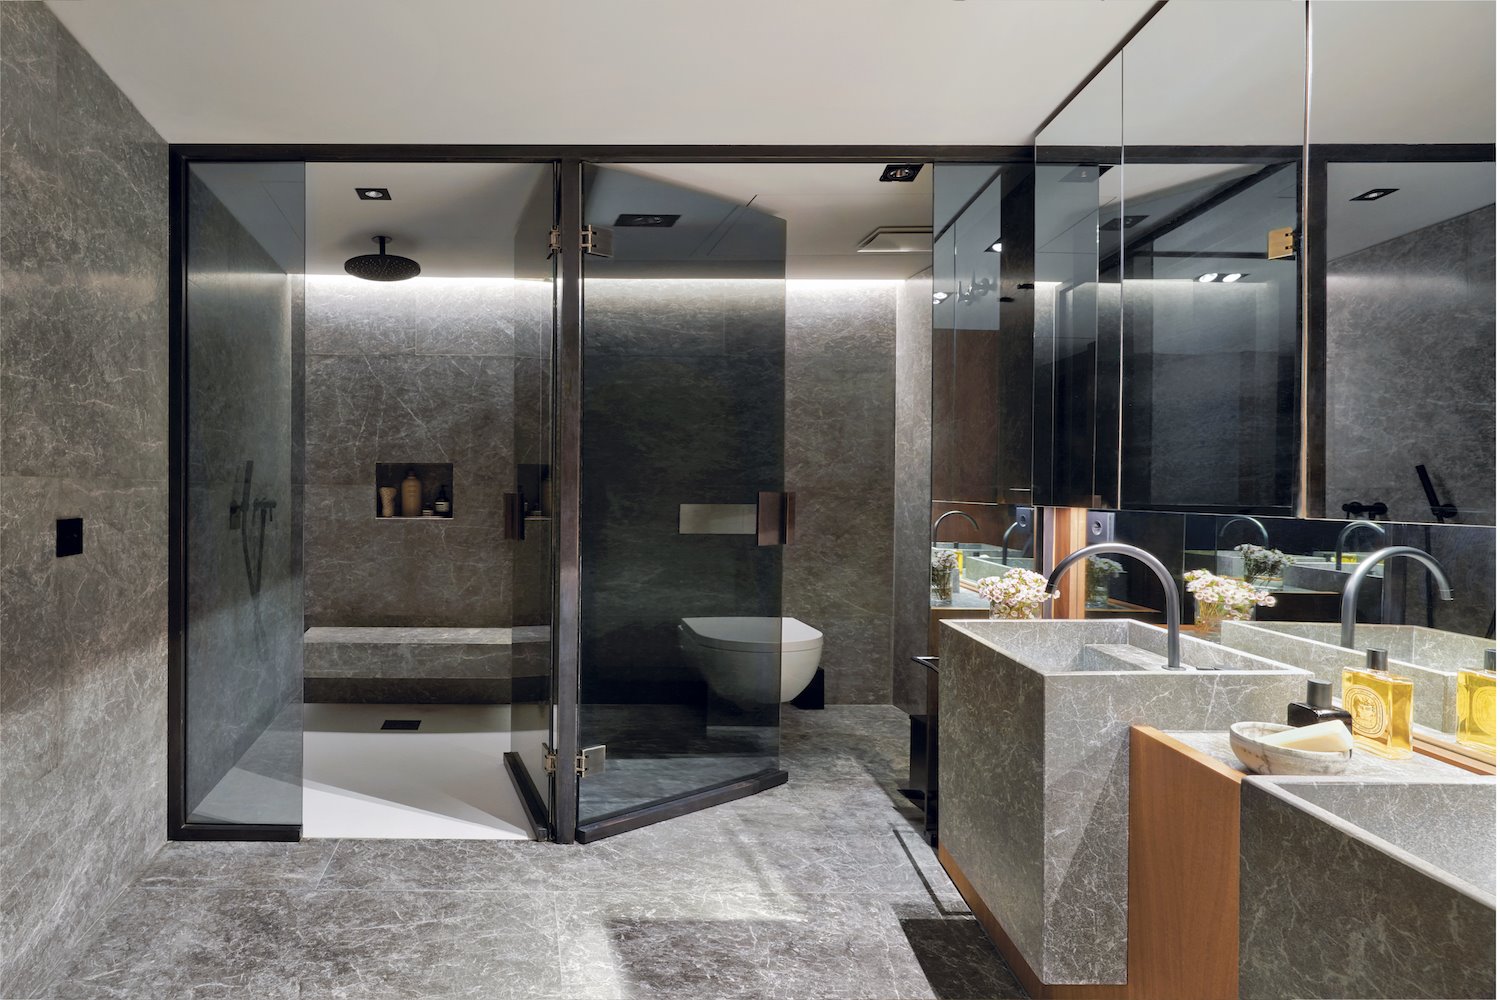 baño moderno de piedra en tonos grises